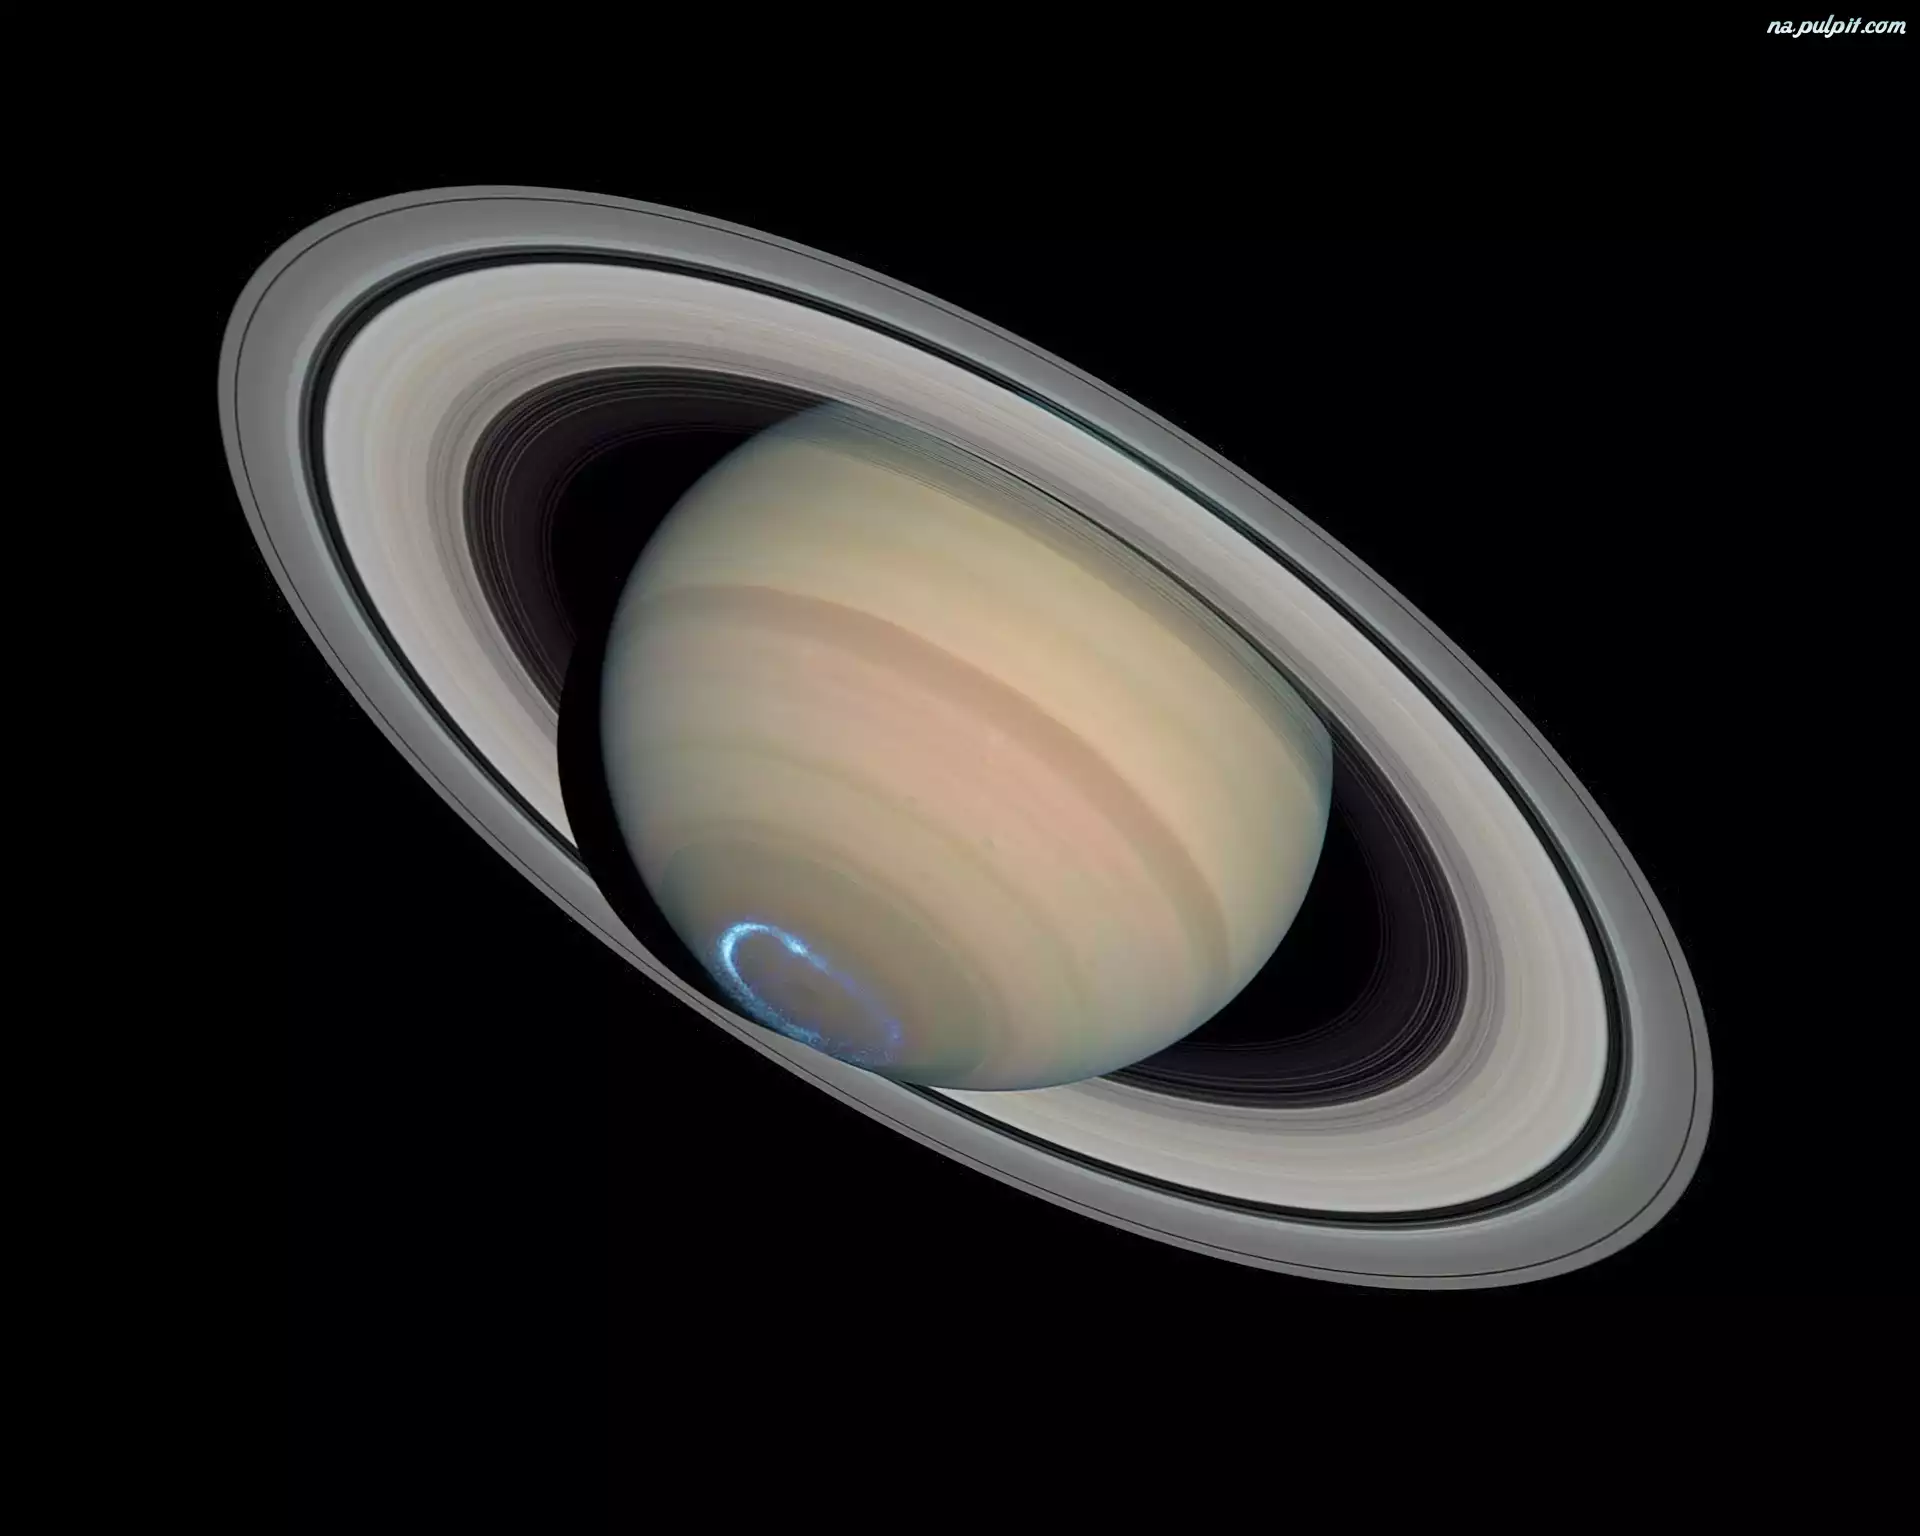 Pierścienie, Planeta, Saturn